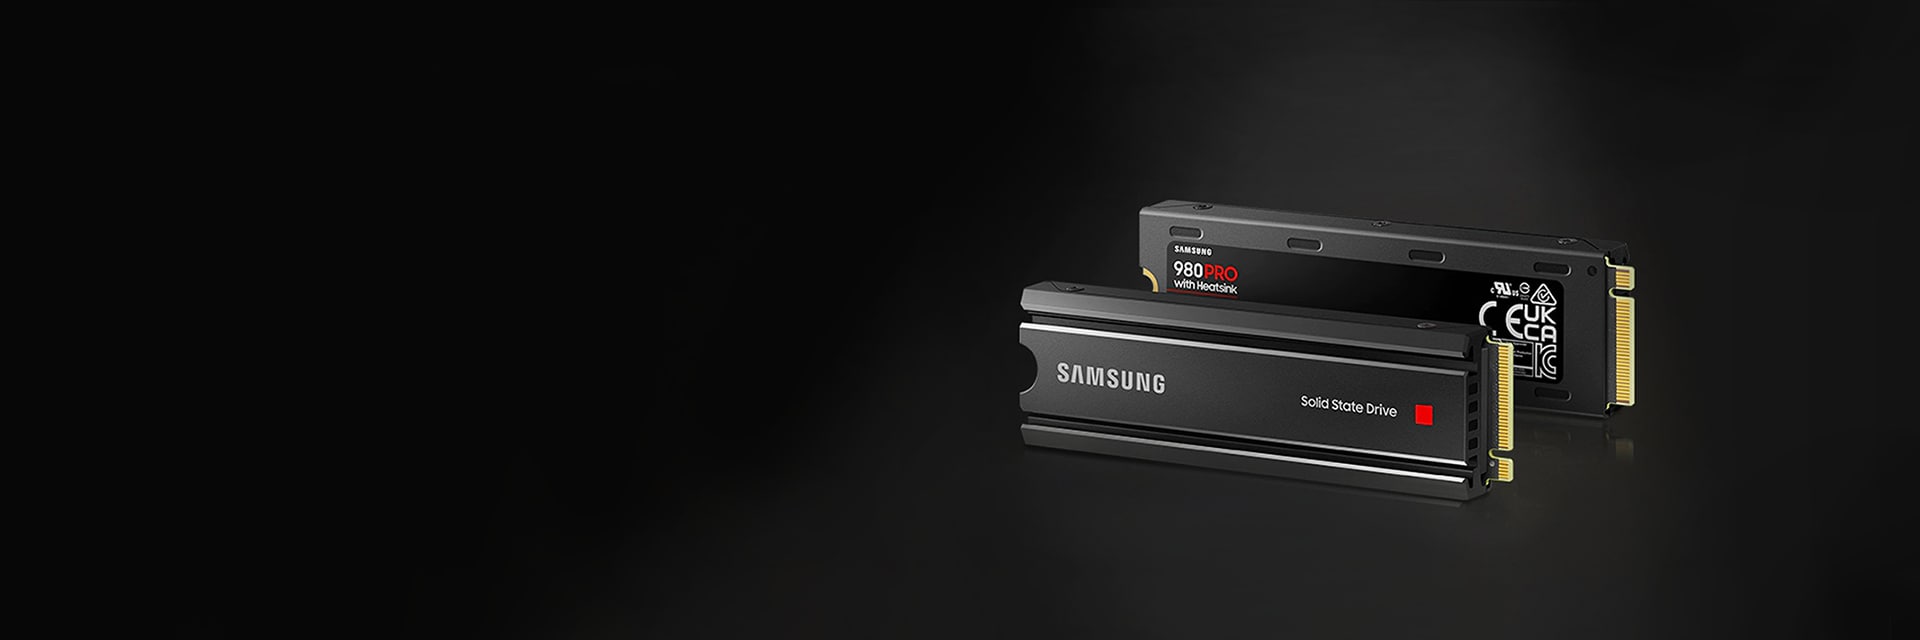 Samsung 980 PRO Heatsink 2TB Internal SSD PCIe Gen 4 x4